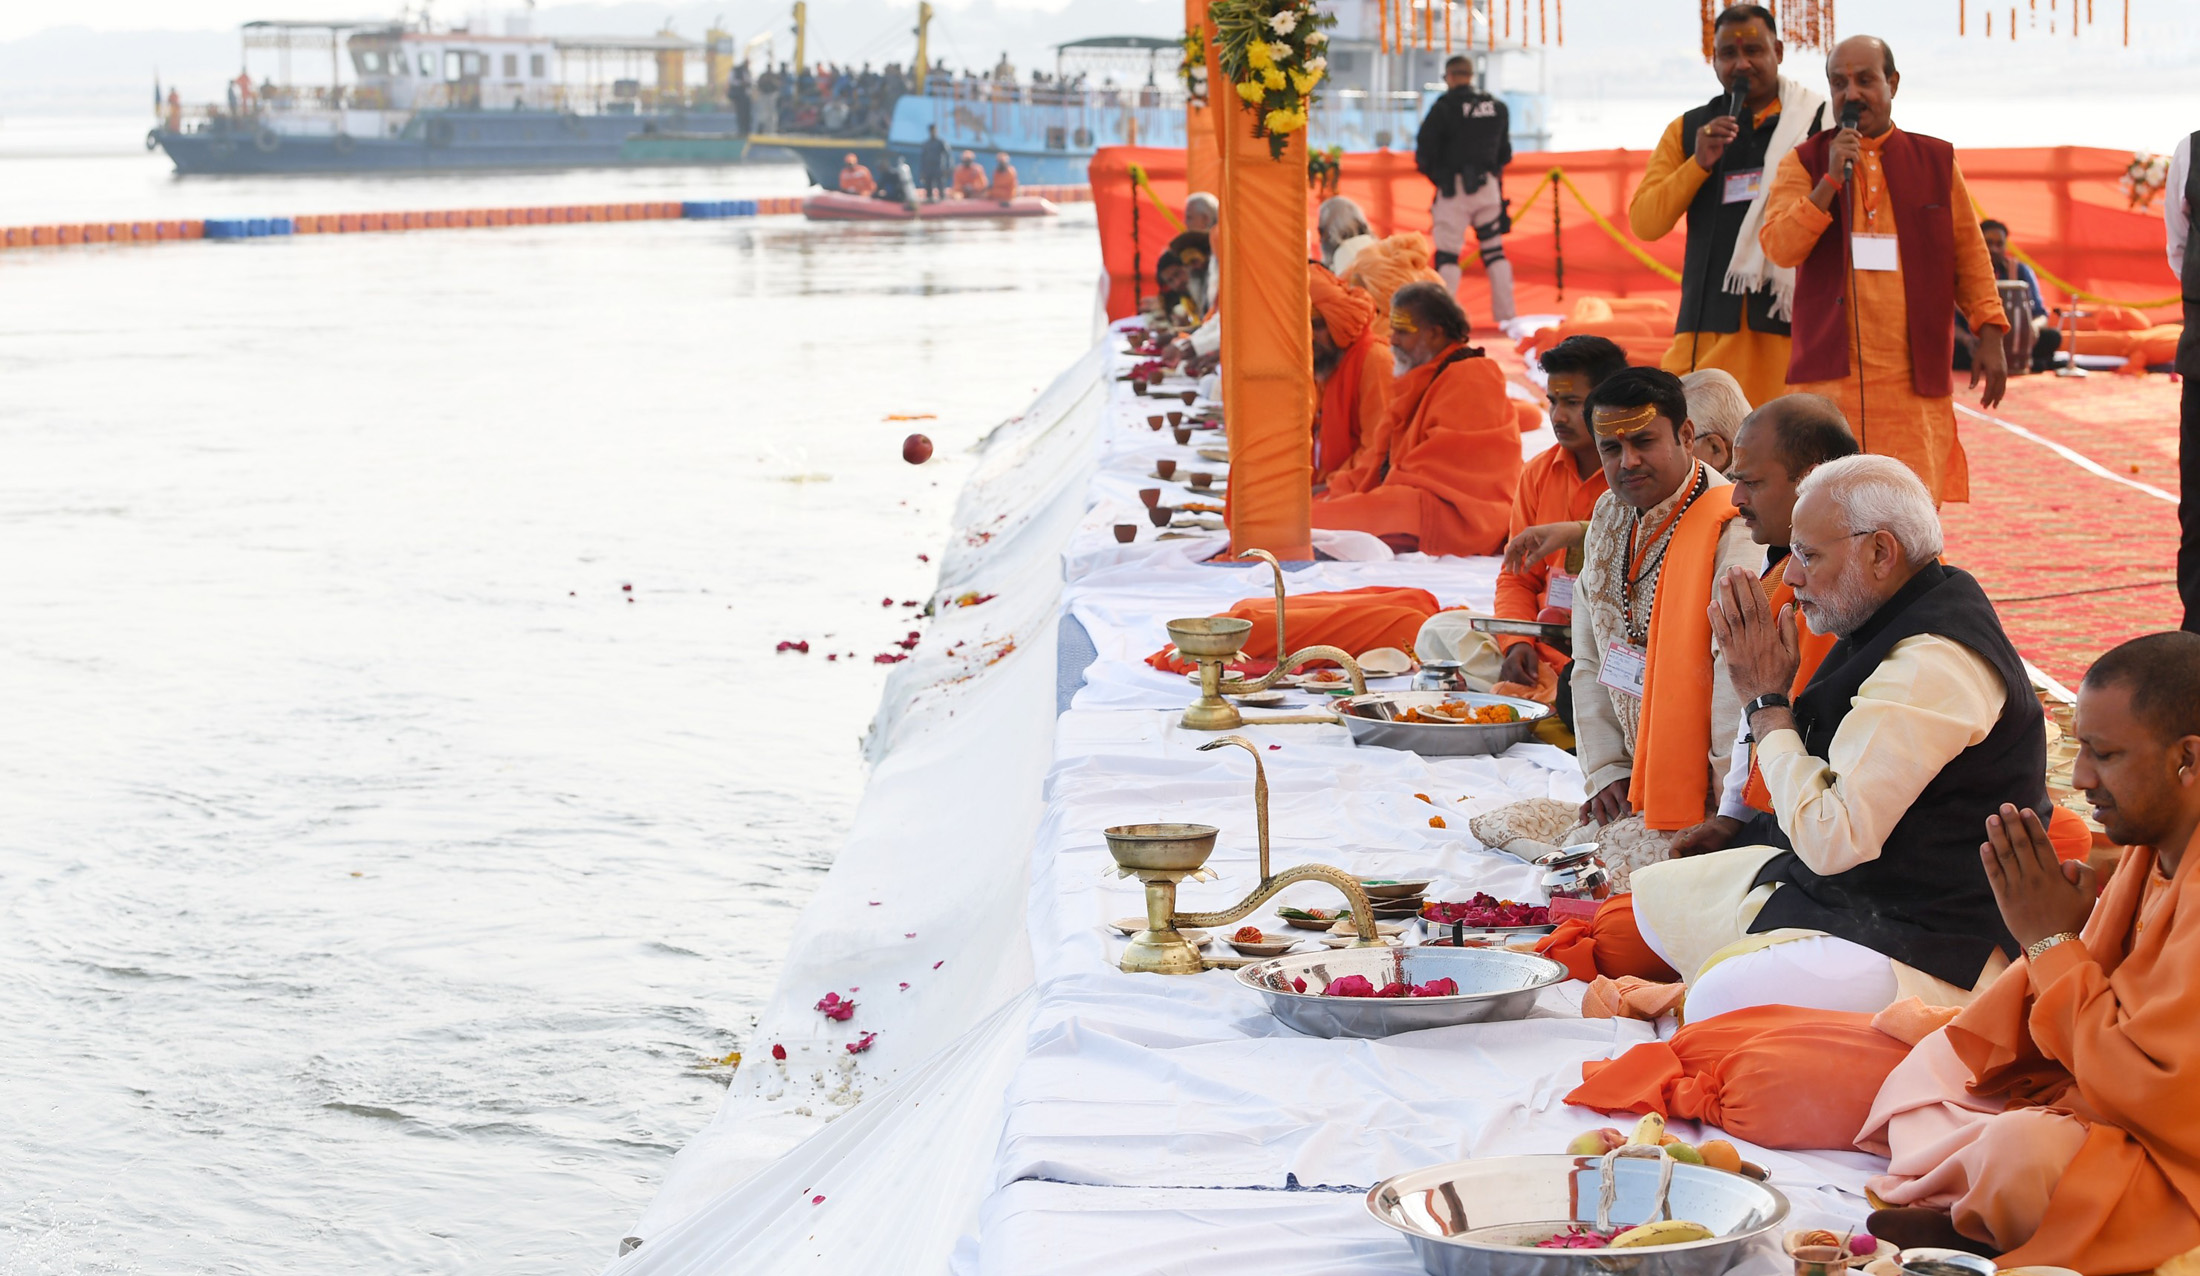 The Prime Minister, Shri Narendra Modi performing the Ganga Pujan, at Prayagraj, in Uttar Pradesh on December 16, 2018. The Chief Minister of Uttar Pradesh, Shri Yogi Adityanath is also seen.